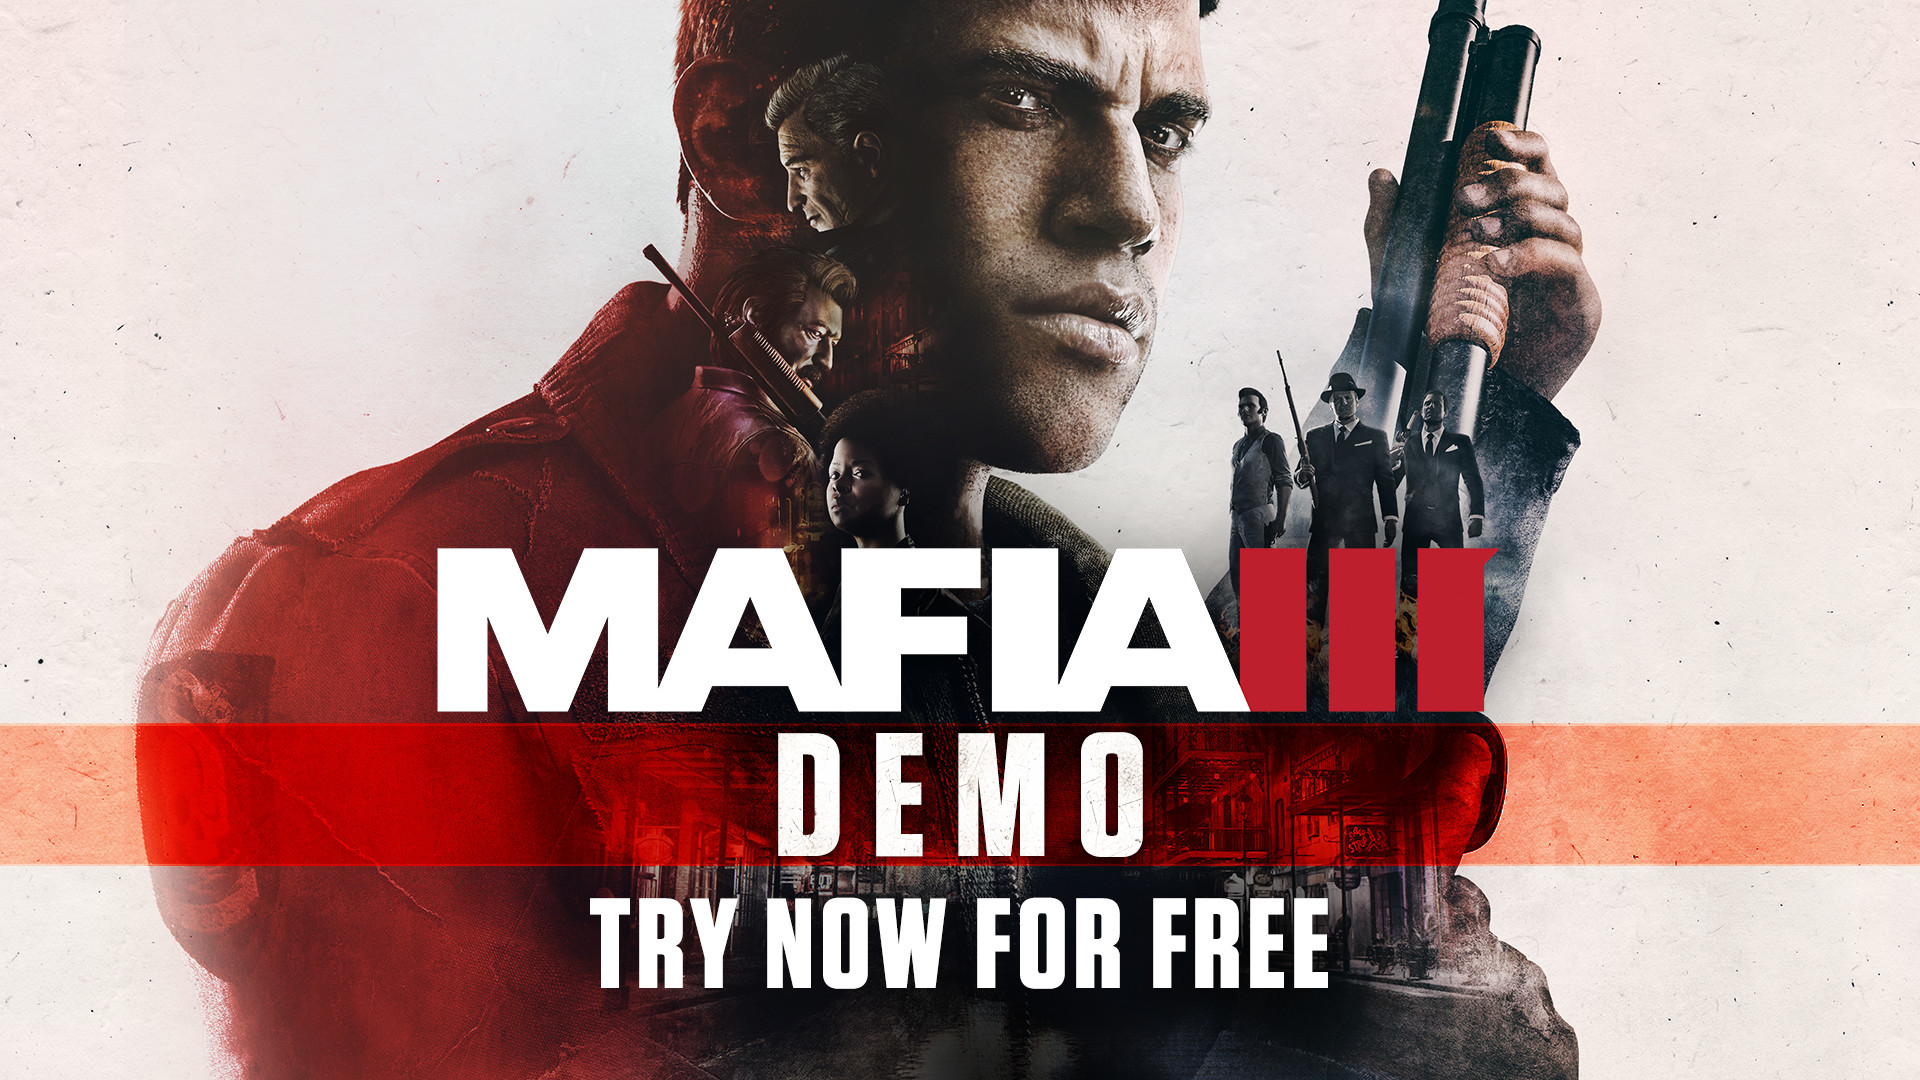 Steam :: Mafia III: Definitive Edition :: Play the Mafia III Demo For Free!